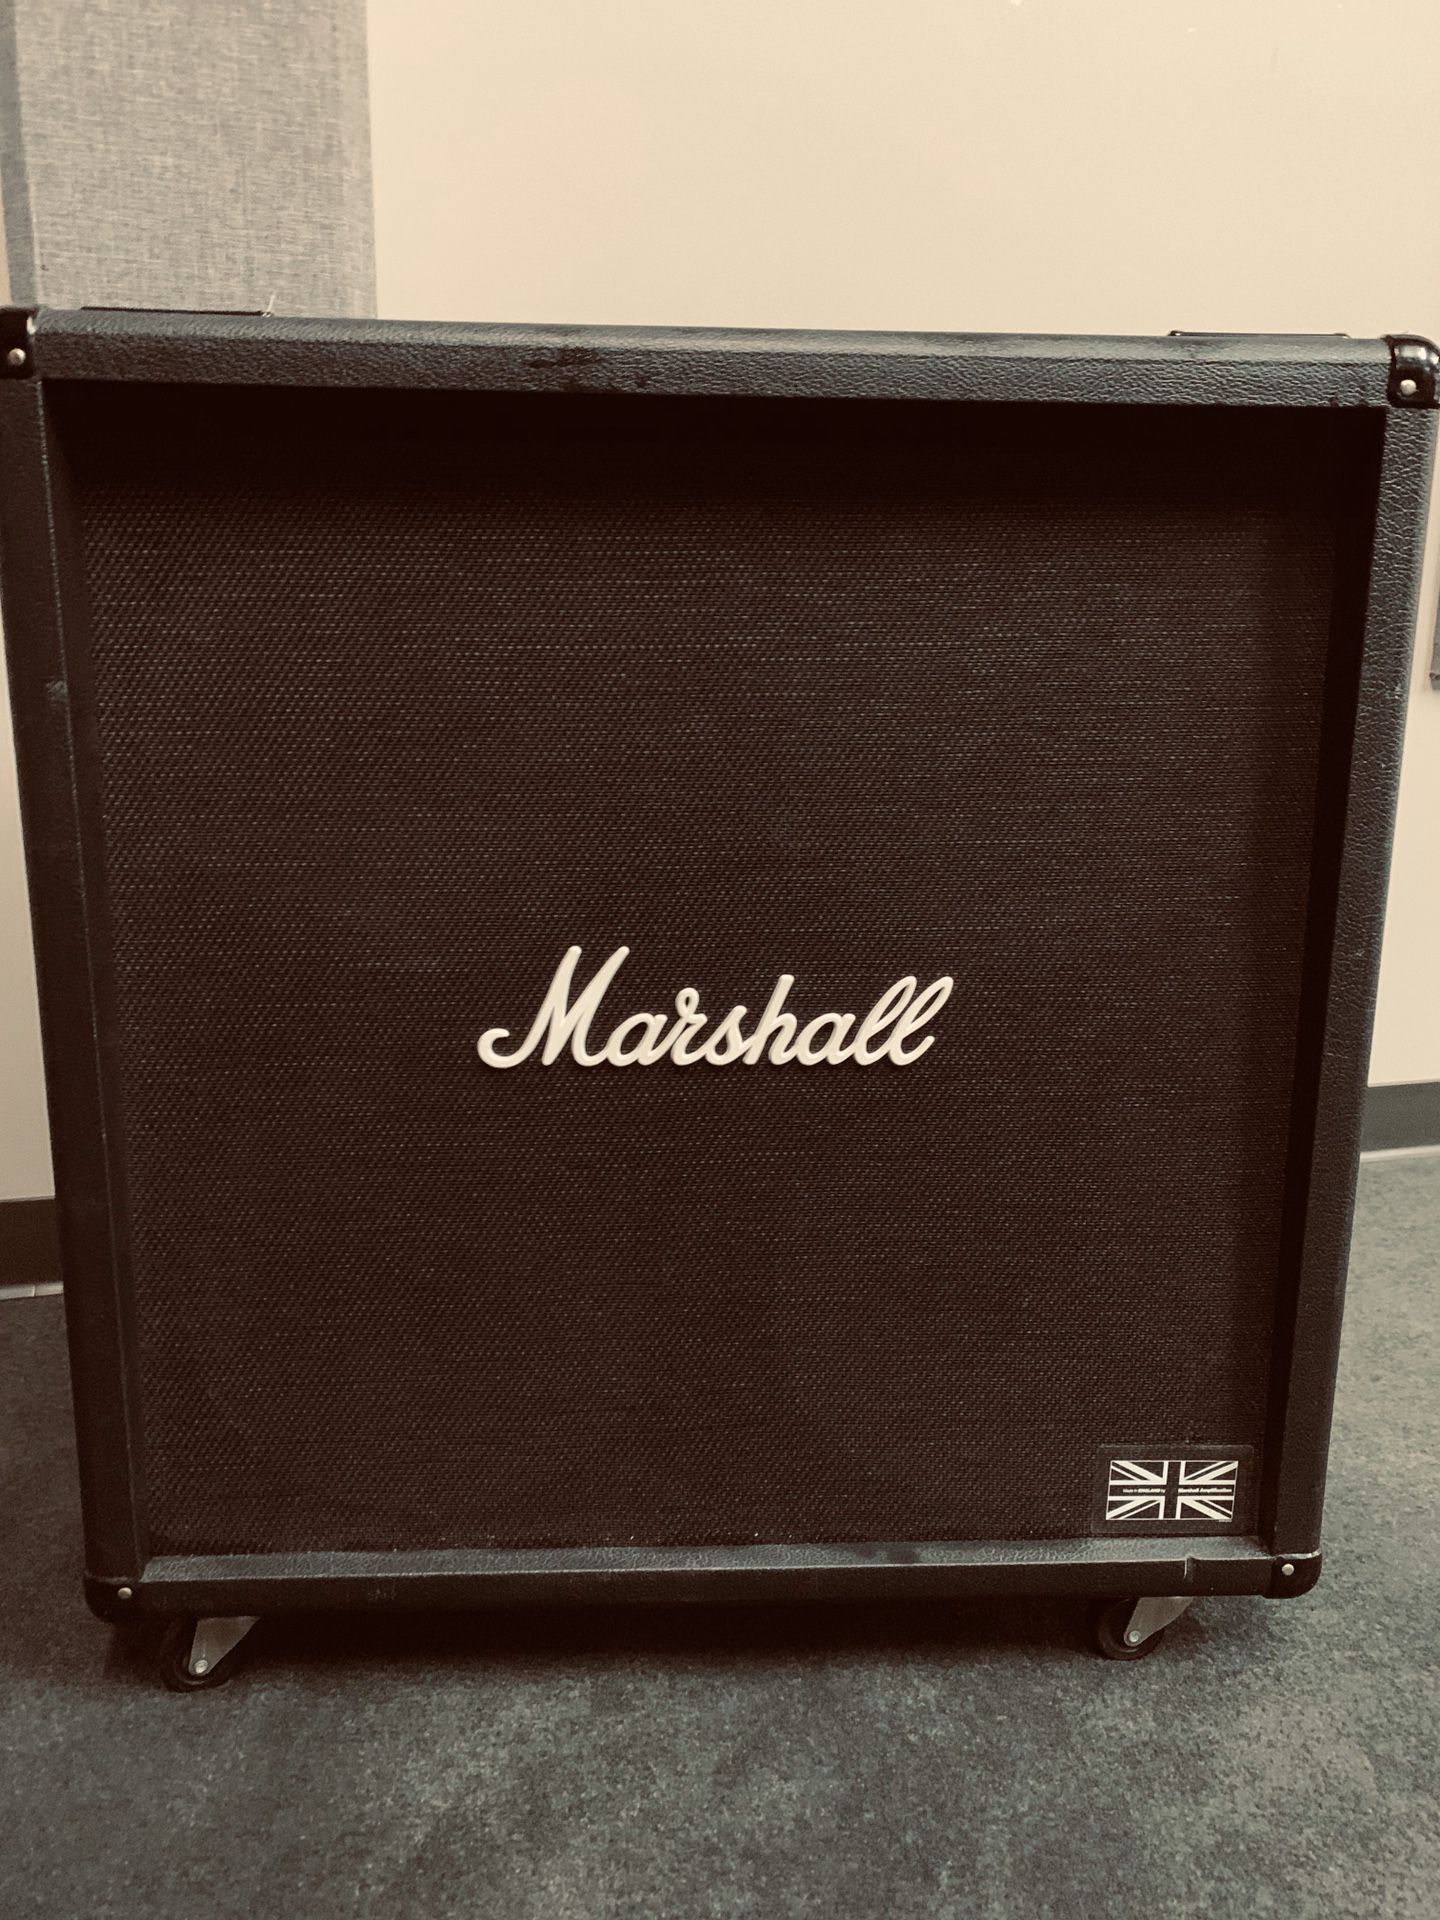 Marshall 4x12” Amplifier Cabinet